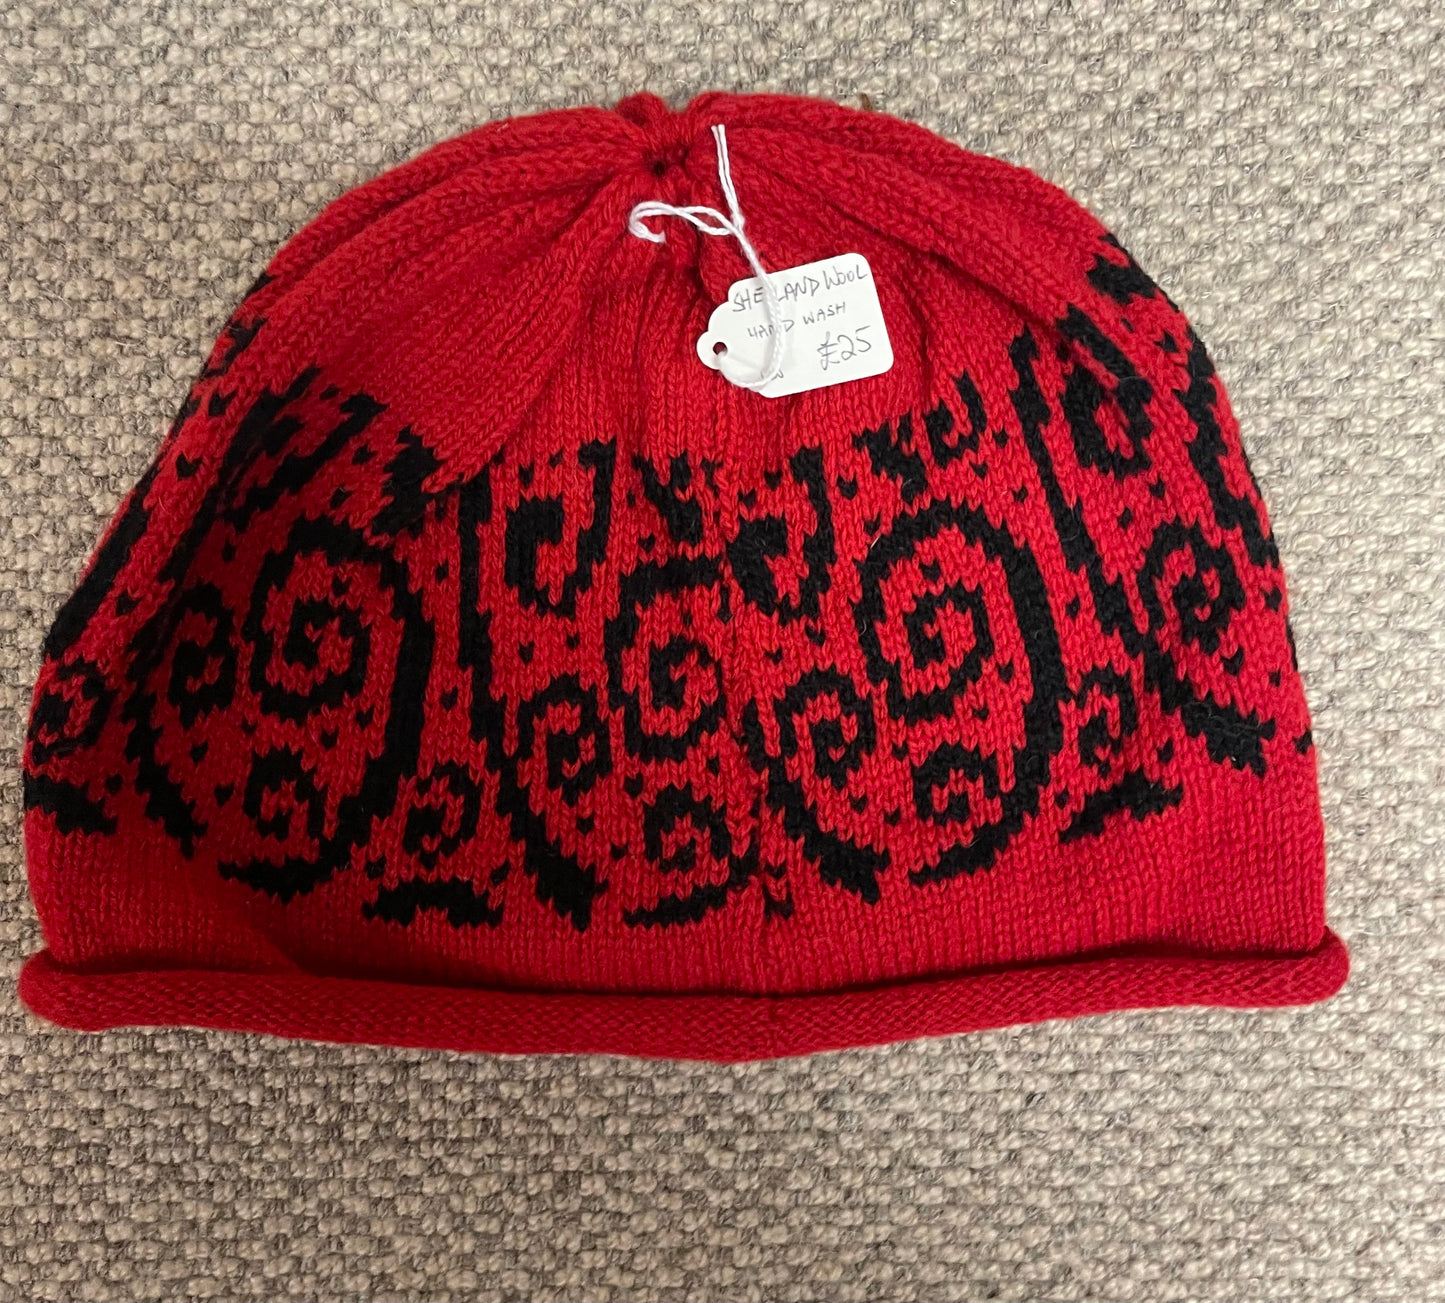 Red and Black  Shetland Woollen hat